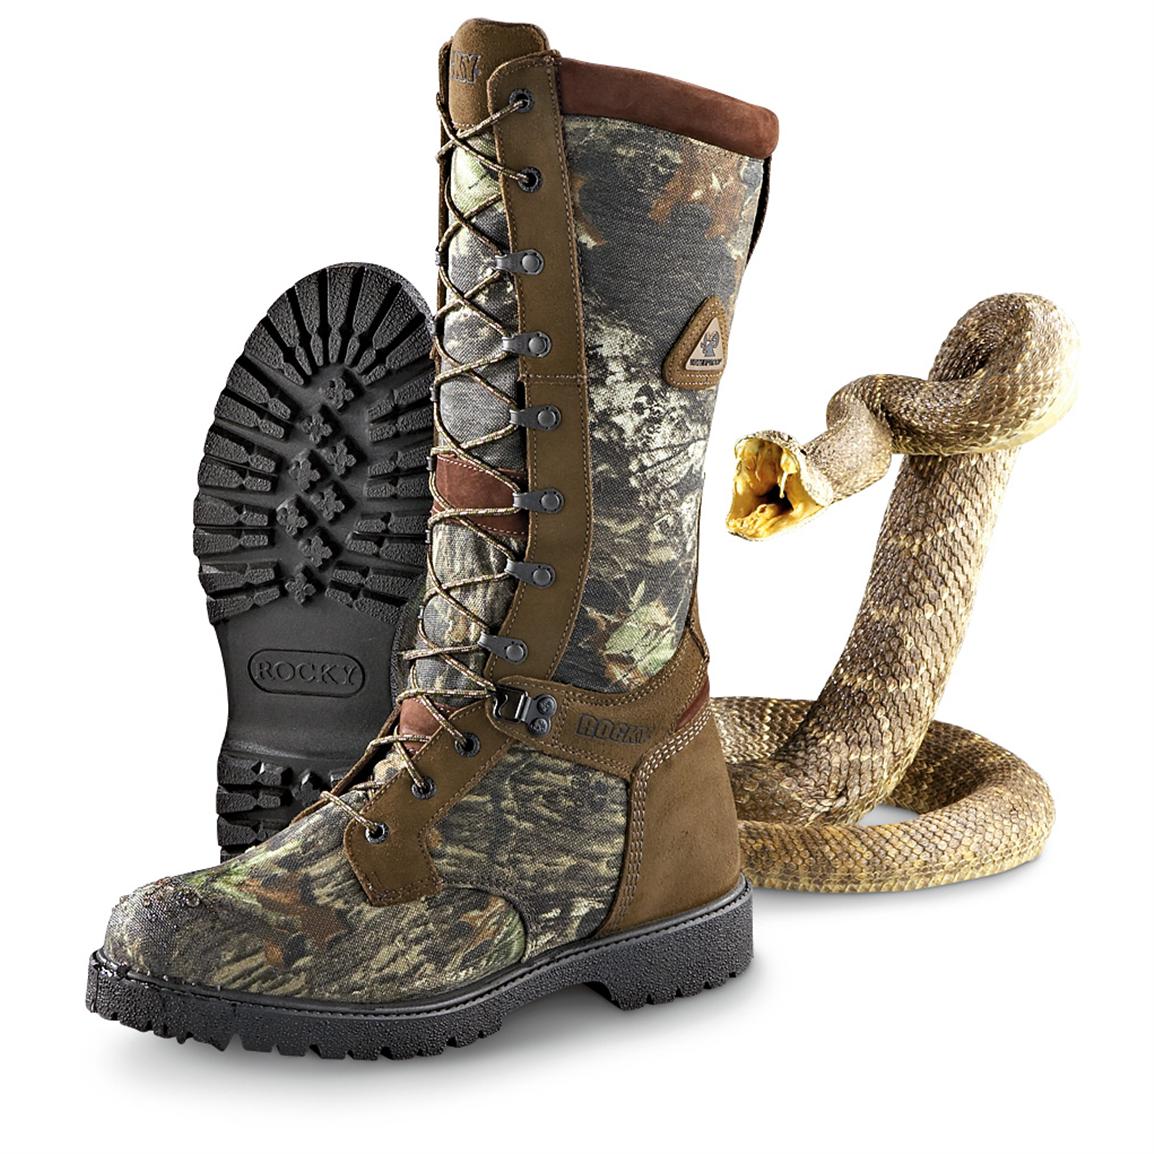 Waterproof Snake Boots For Men